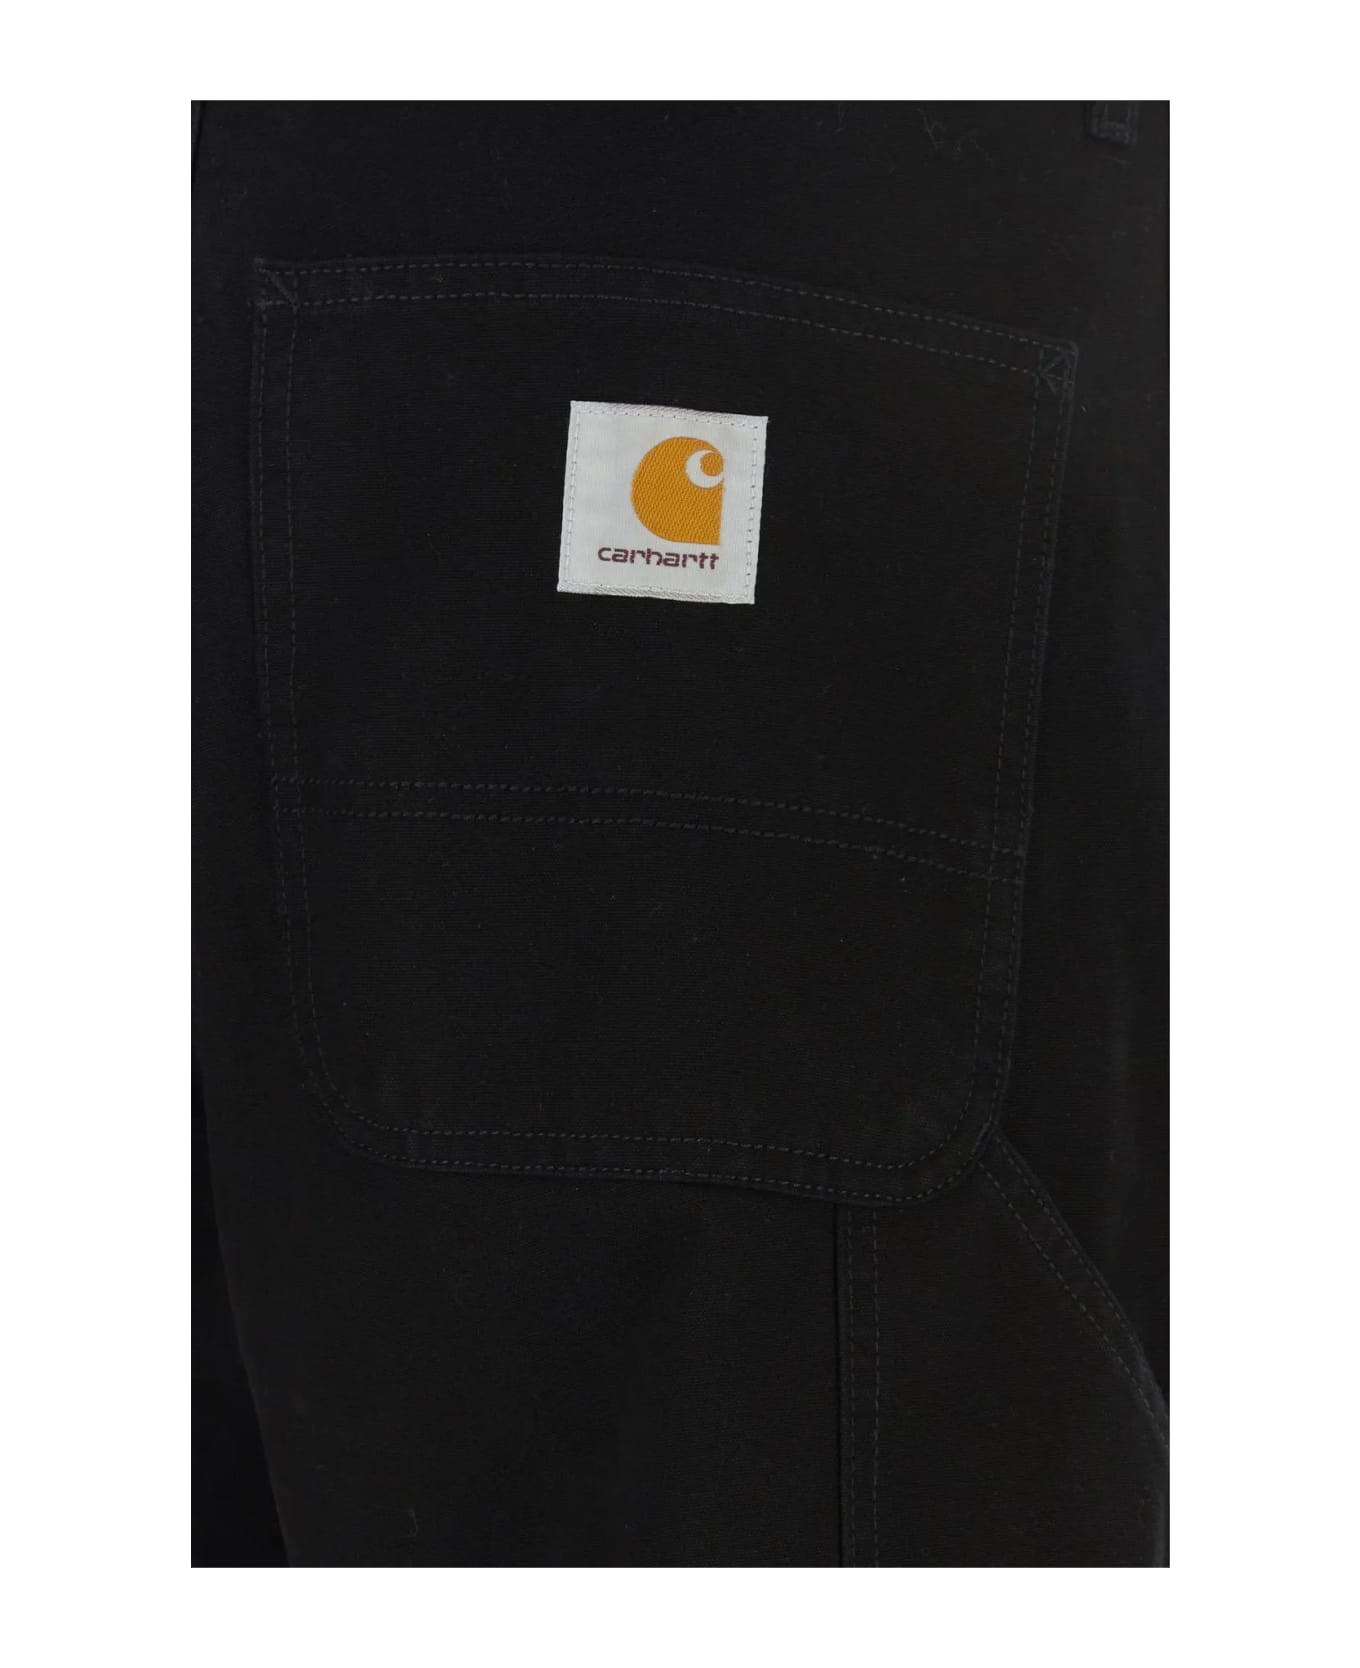 Carhartt WIP Black Cotton Double Knee Short - Black